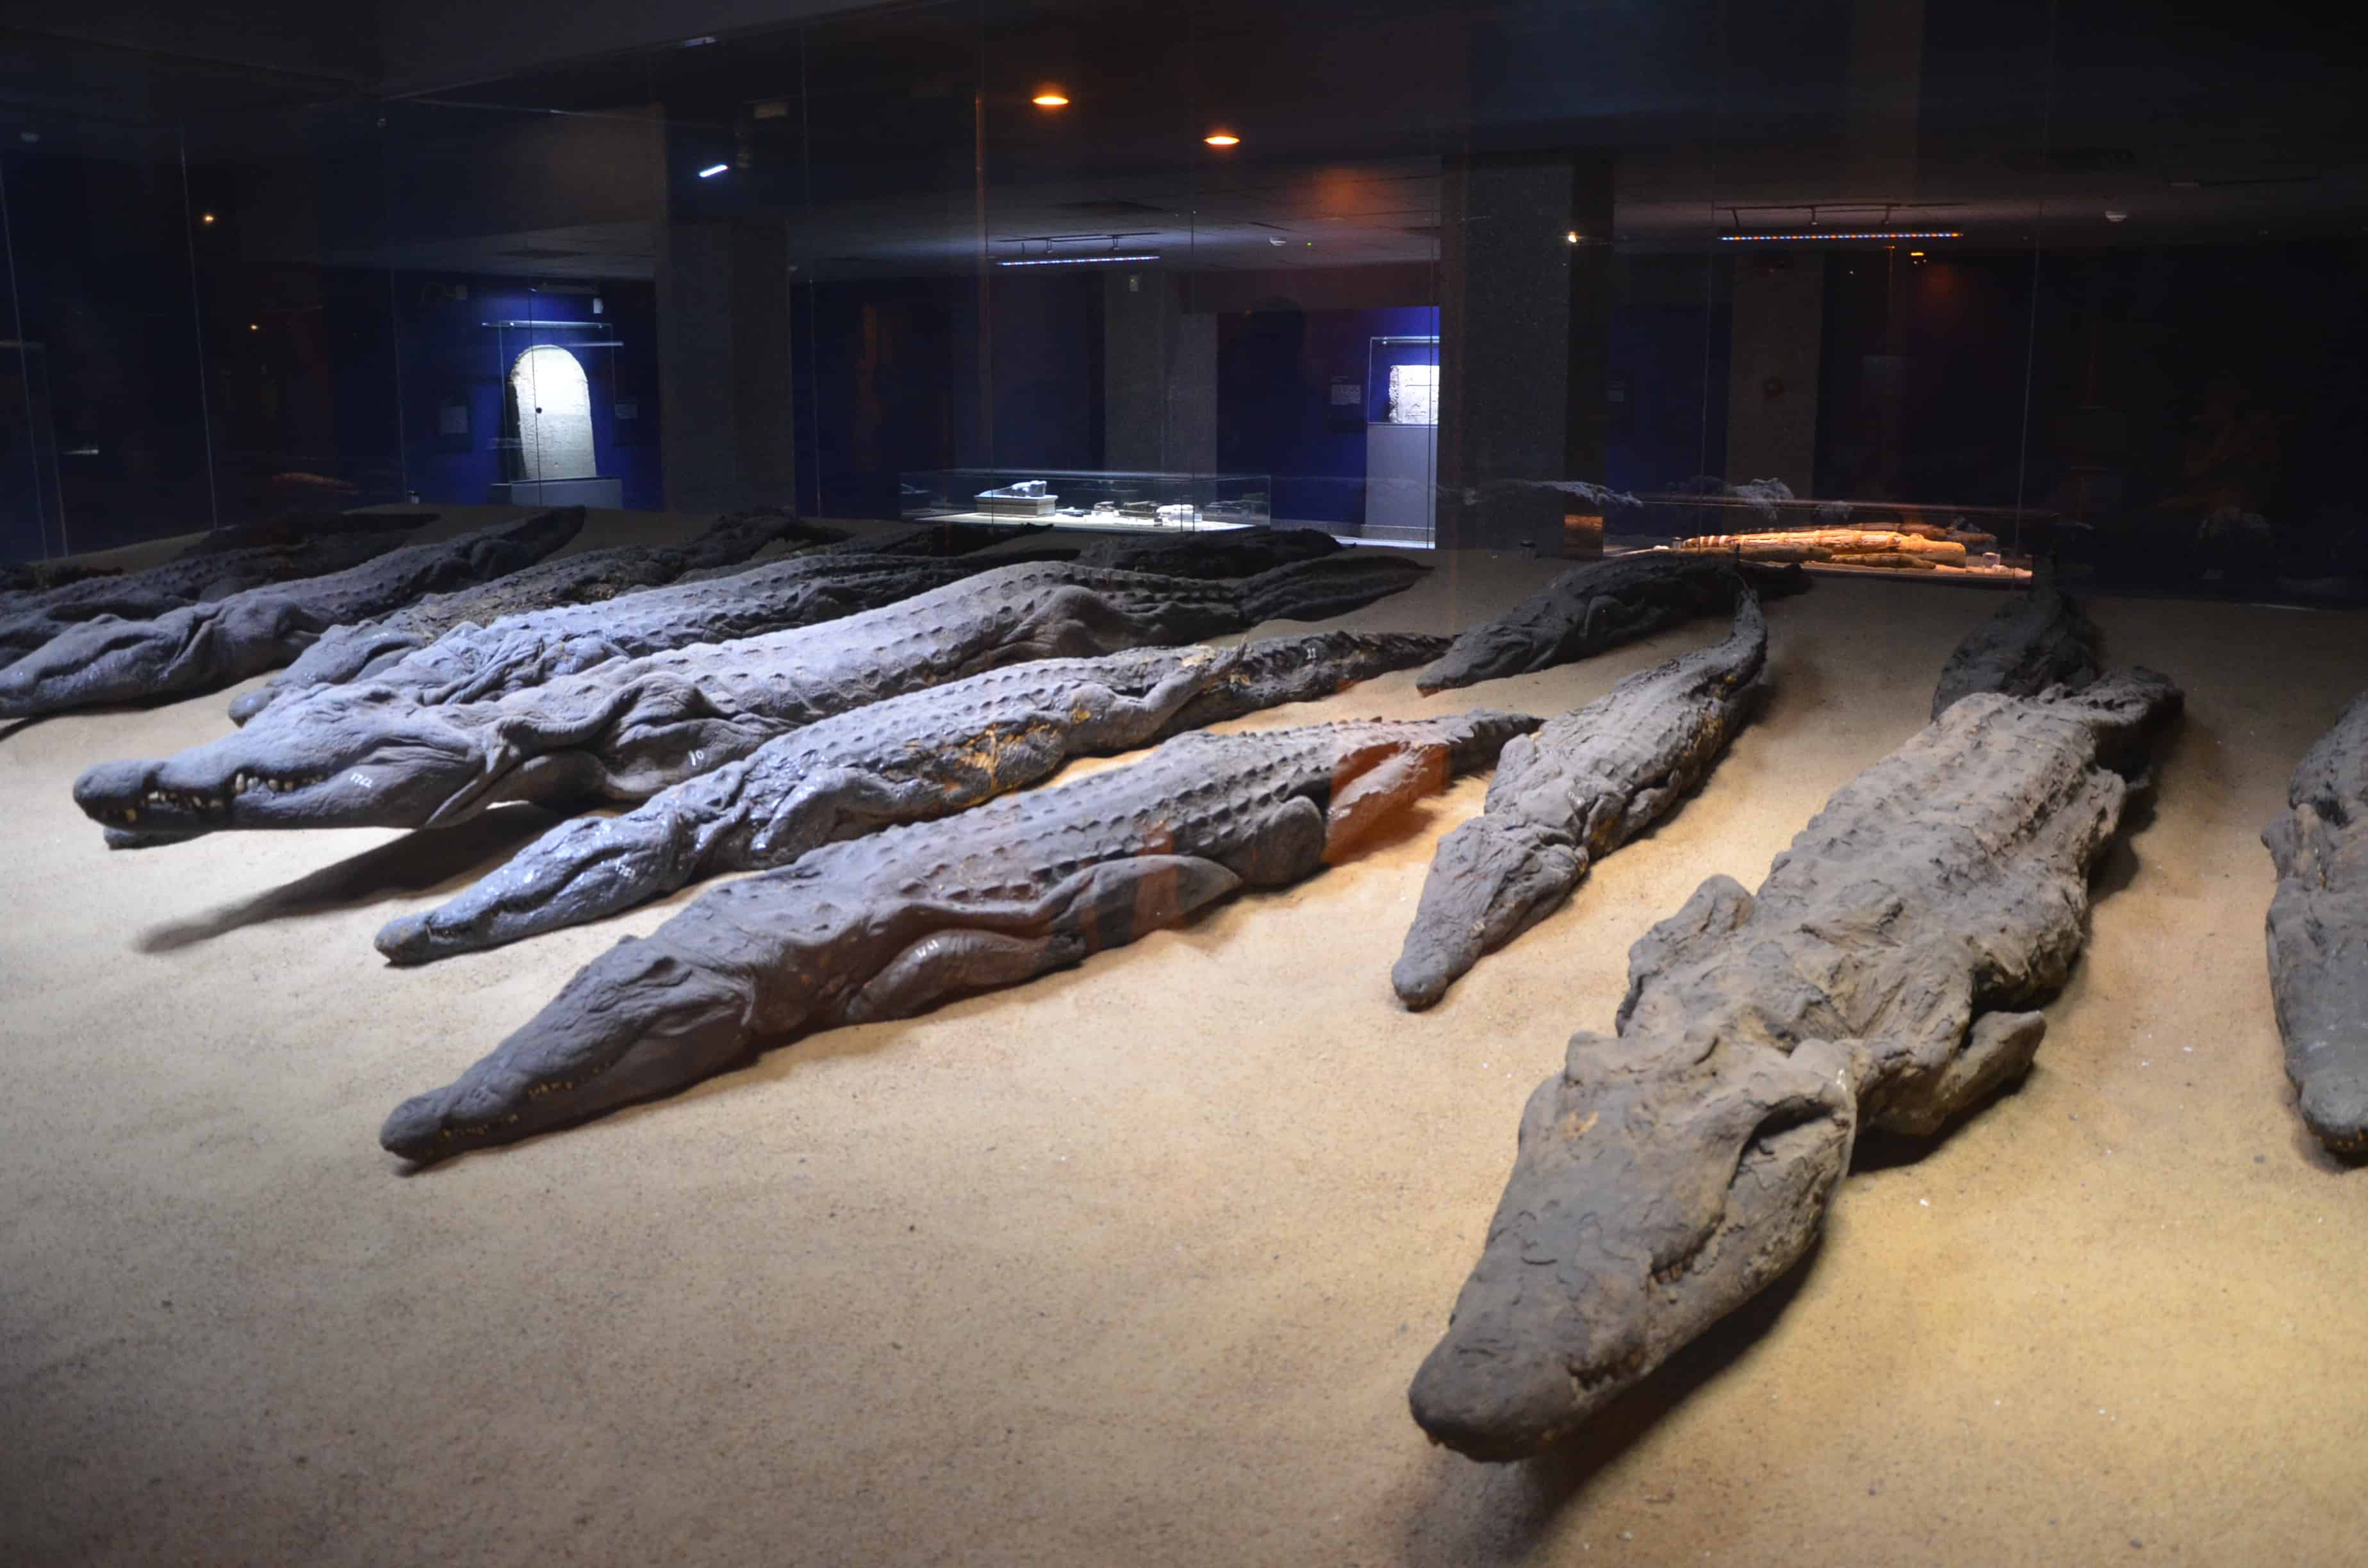 Crocodile Museum at Kom Ombo, Egypt